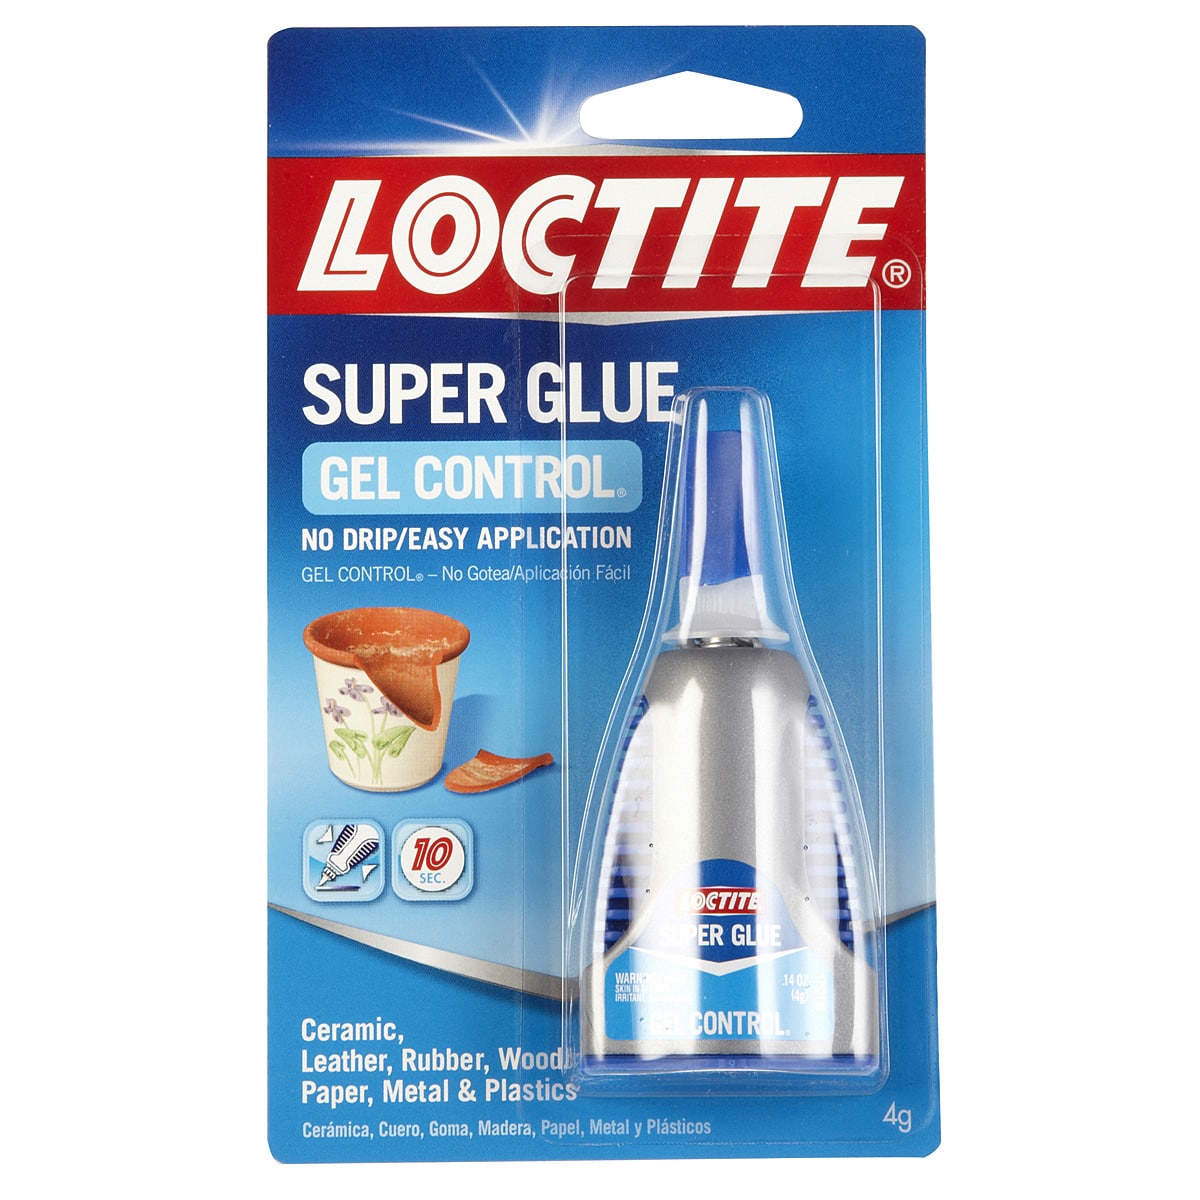 Supertite Instant Super Glue Gel